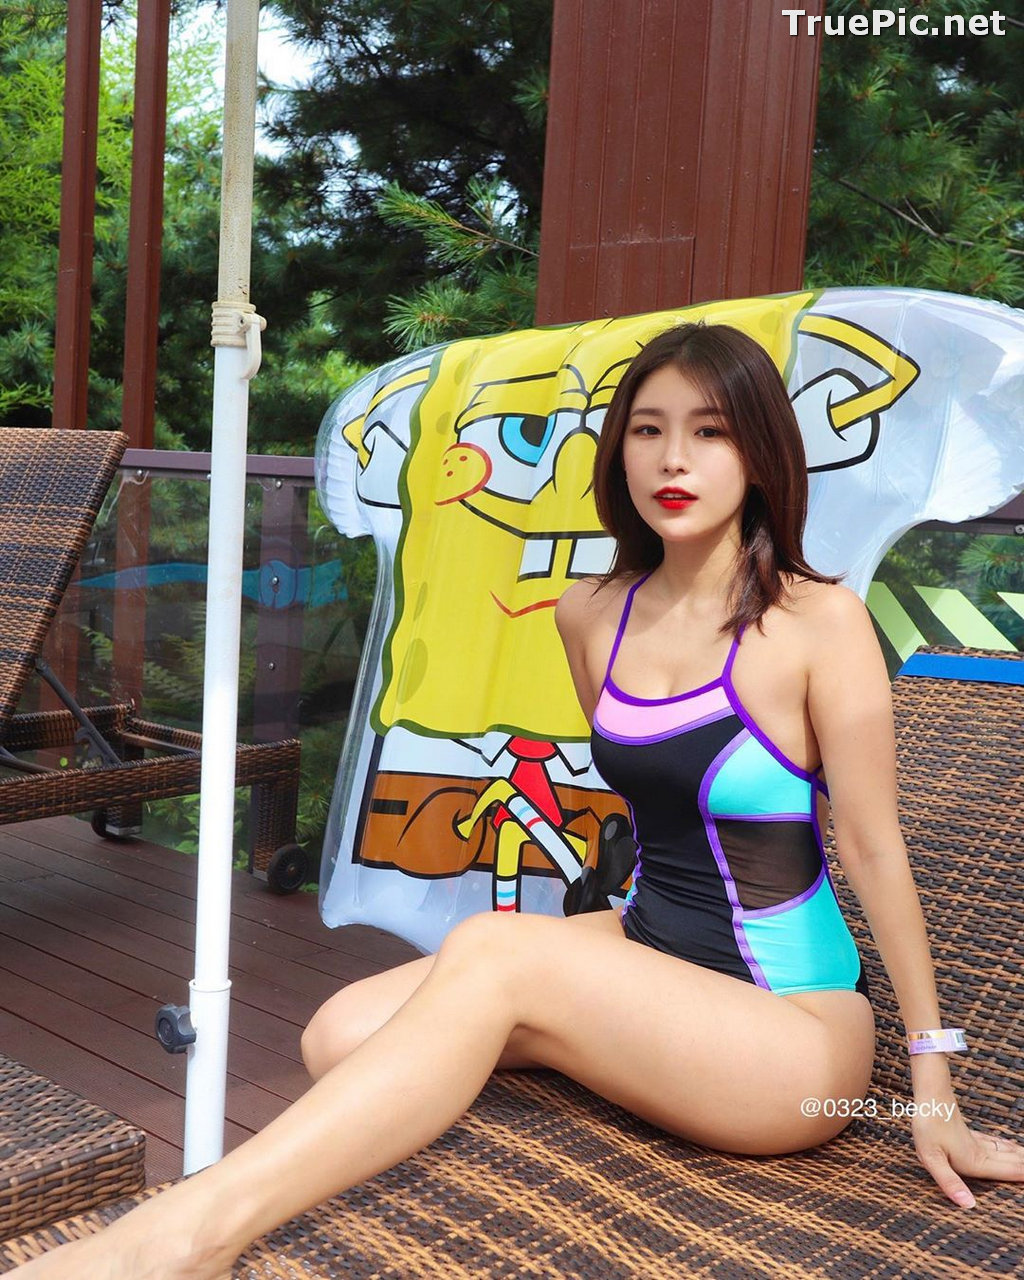 Image Korean Sexy Model - Becky's Hot Photos 2020 - TruePic.net - Picture-20